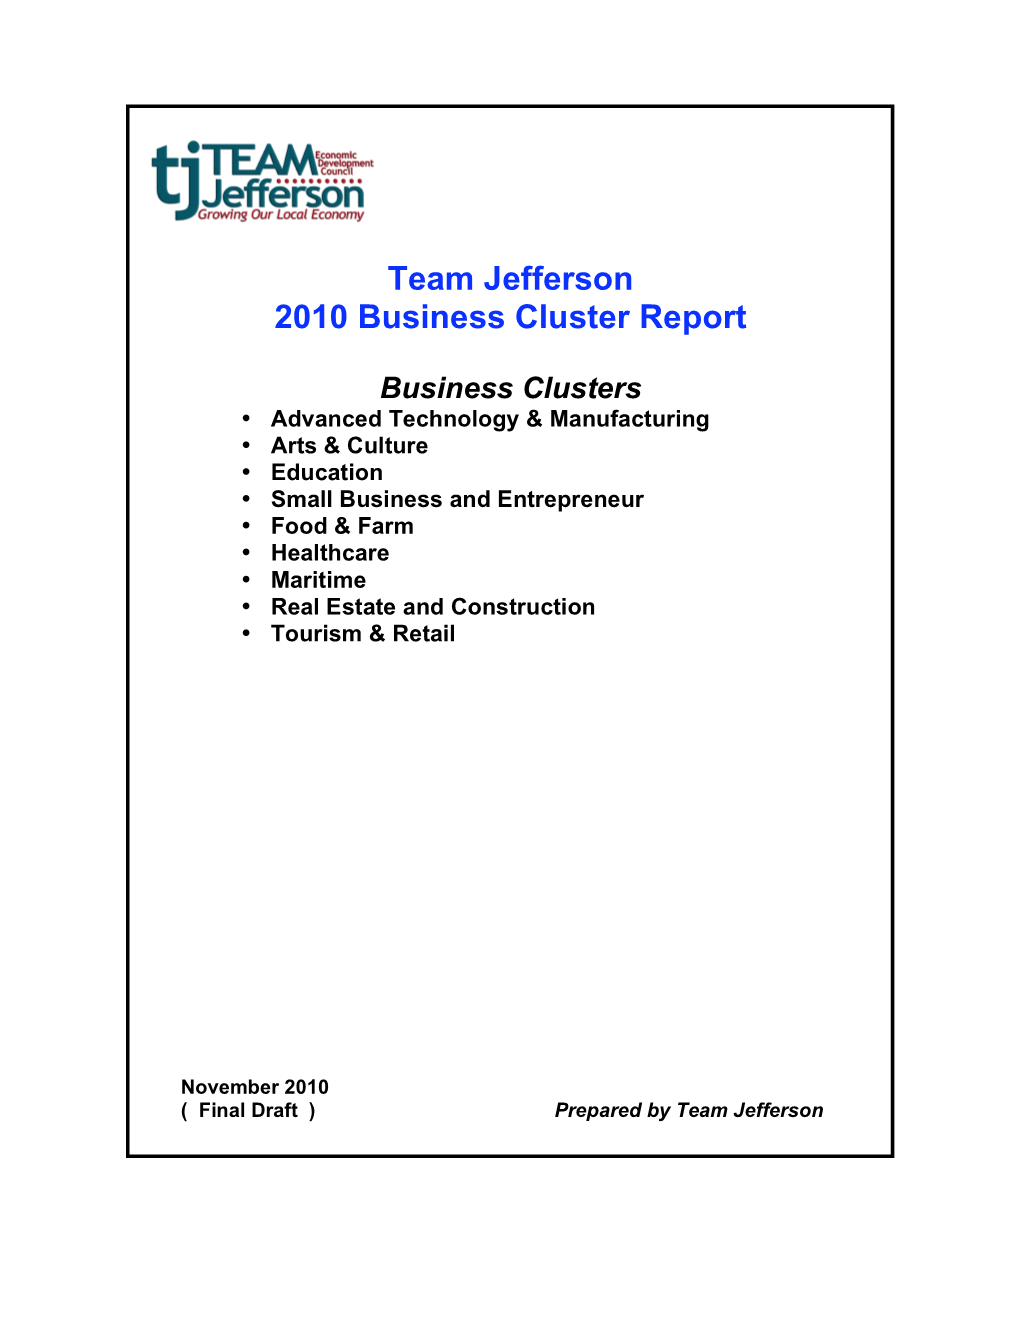 Team Jefferson 2010 Business Cluster Report